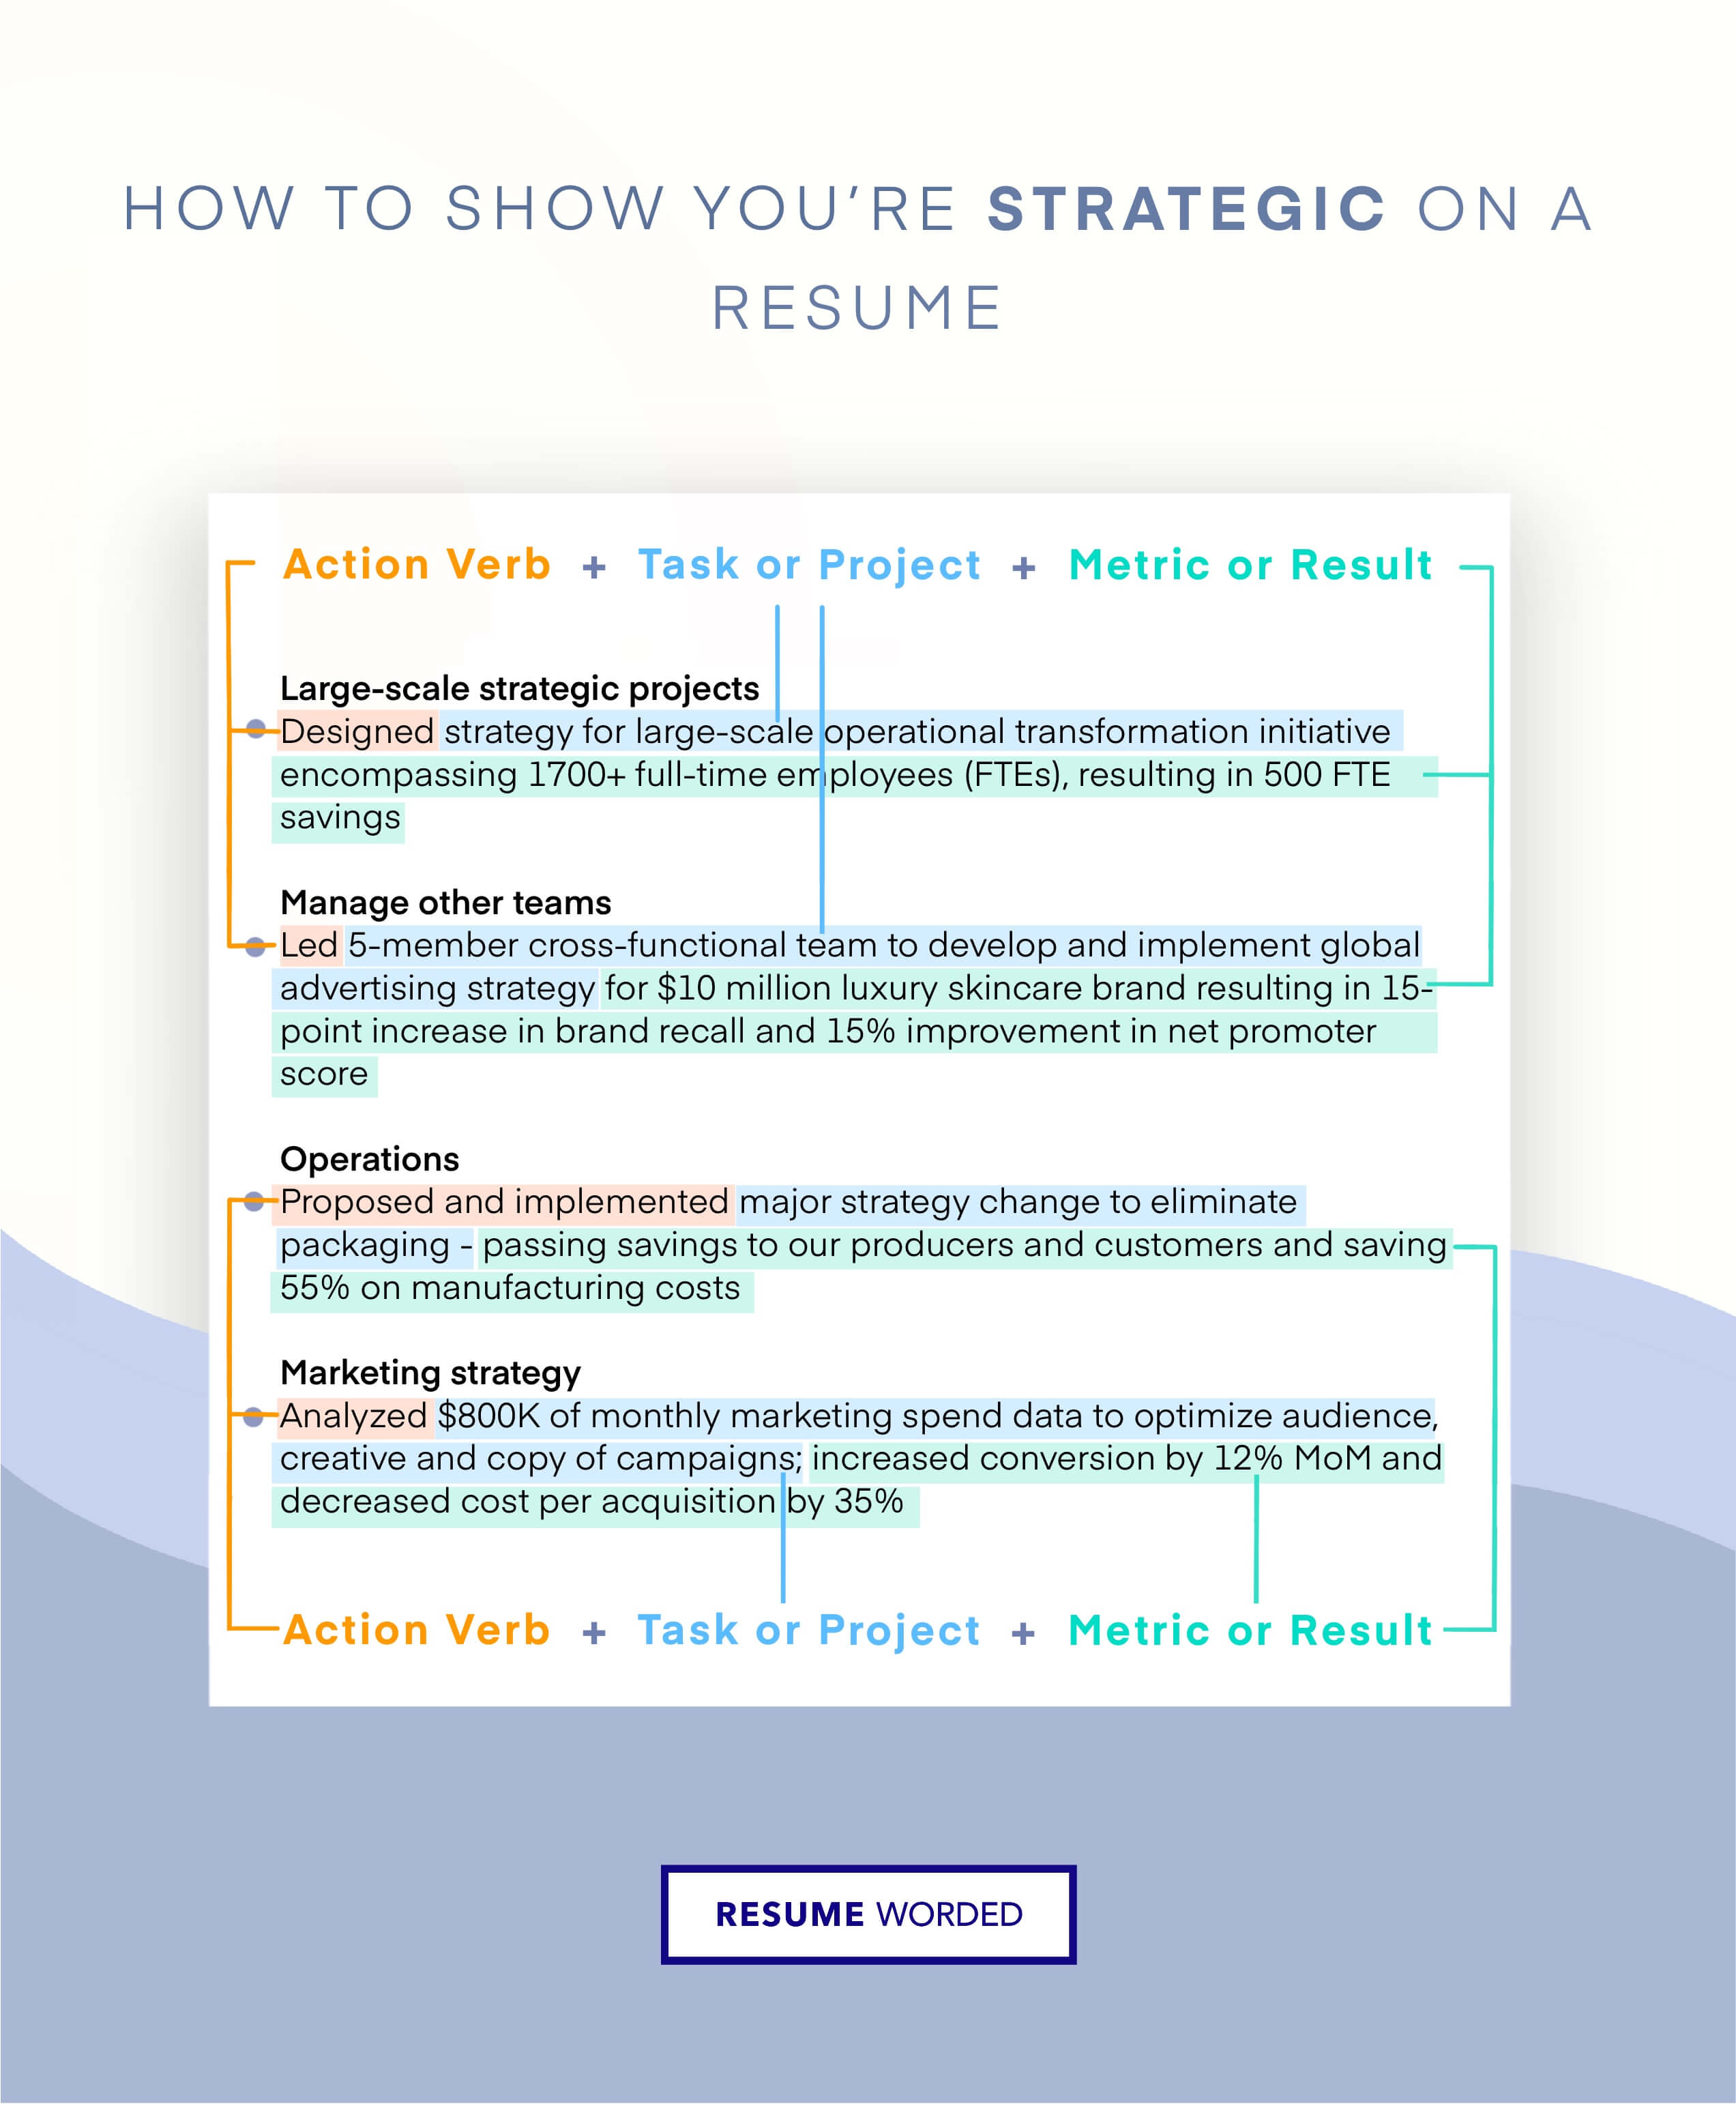 Showcase your strategic thinking skills - Equity Research Senior Analyst CV